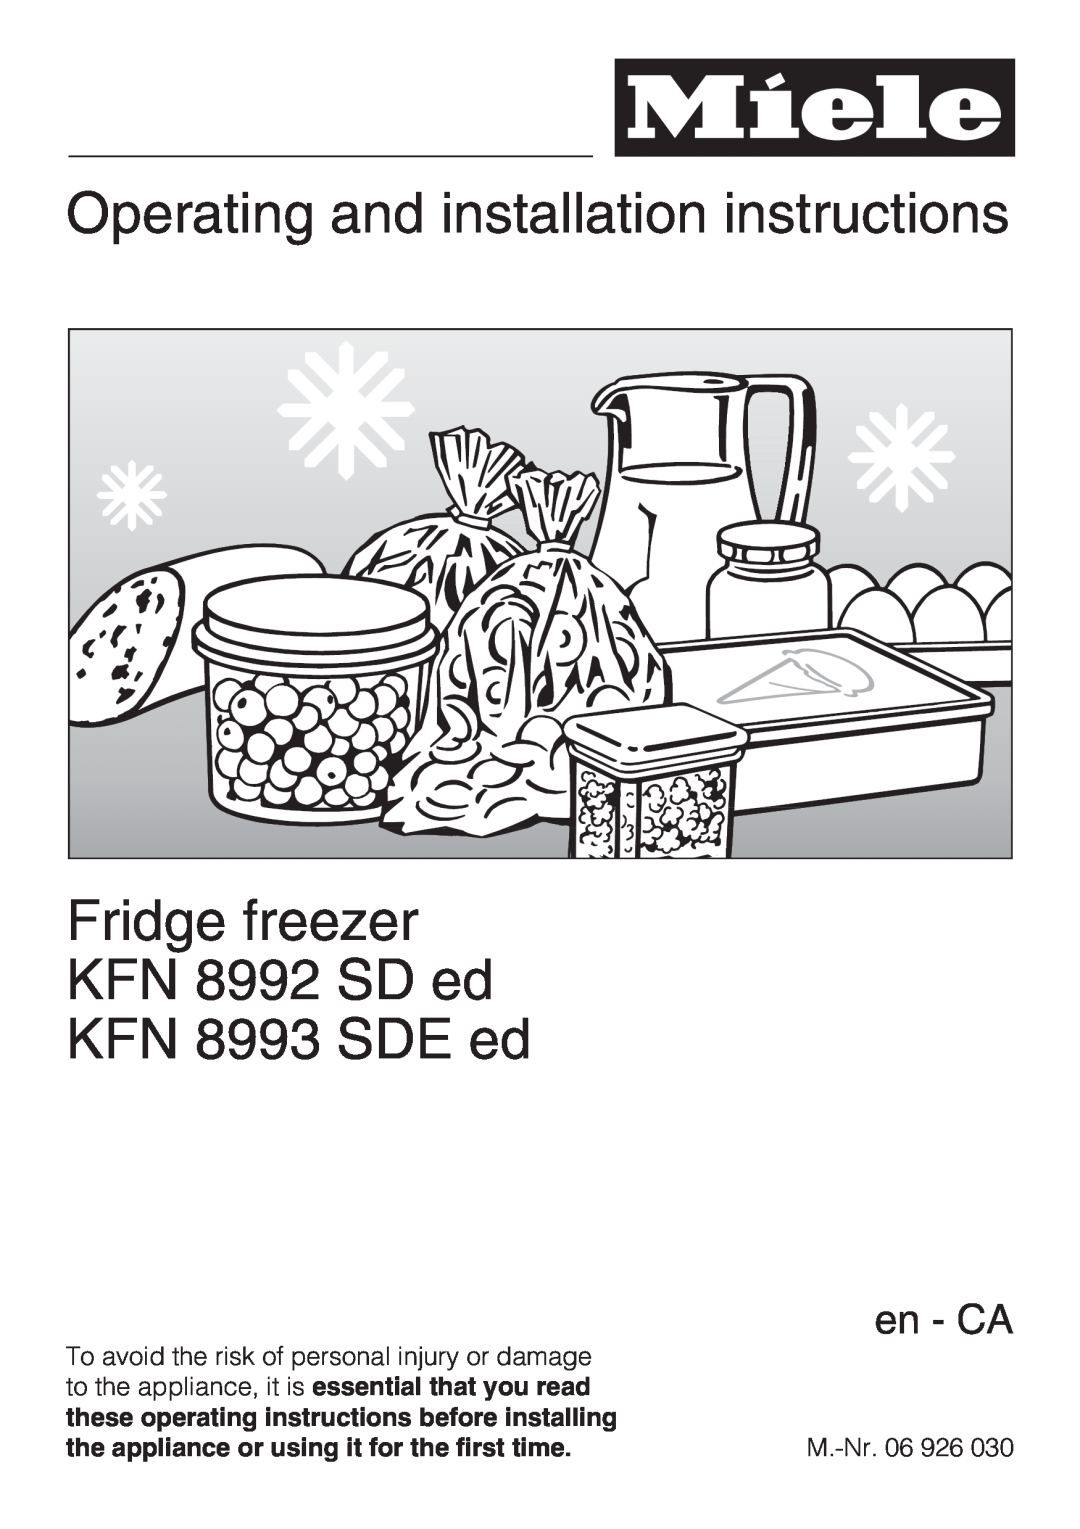 Miele KFN 8993 SDE ED installation instructions these operating instructions before installing, KFN 8993 SDE ed, en - CA 